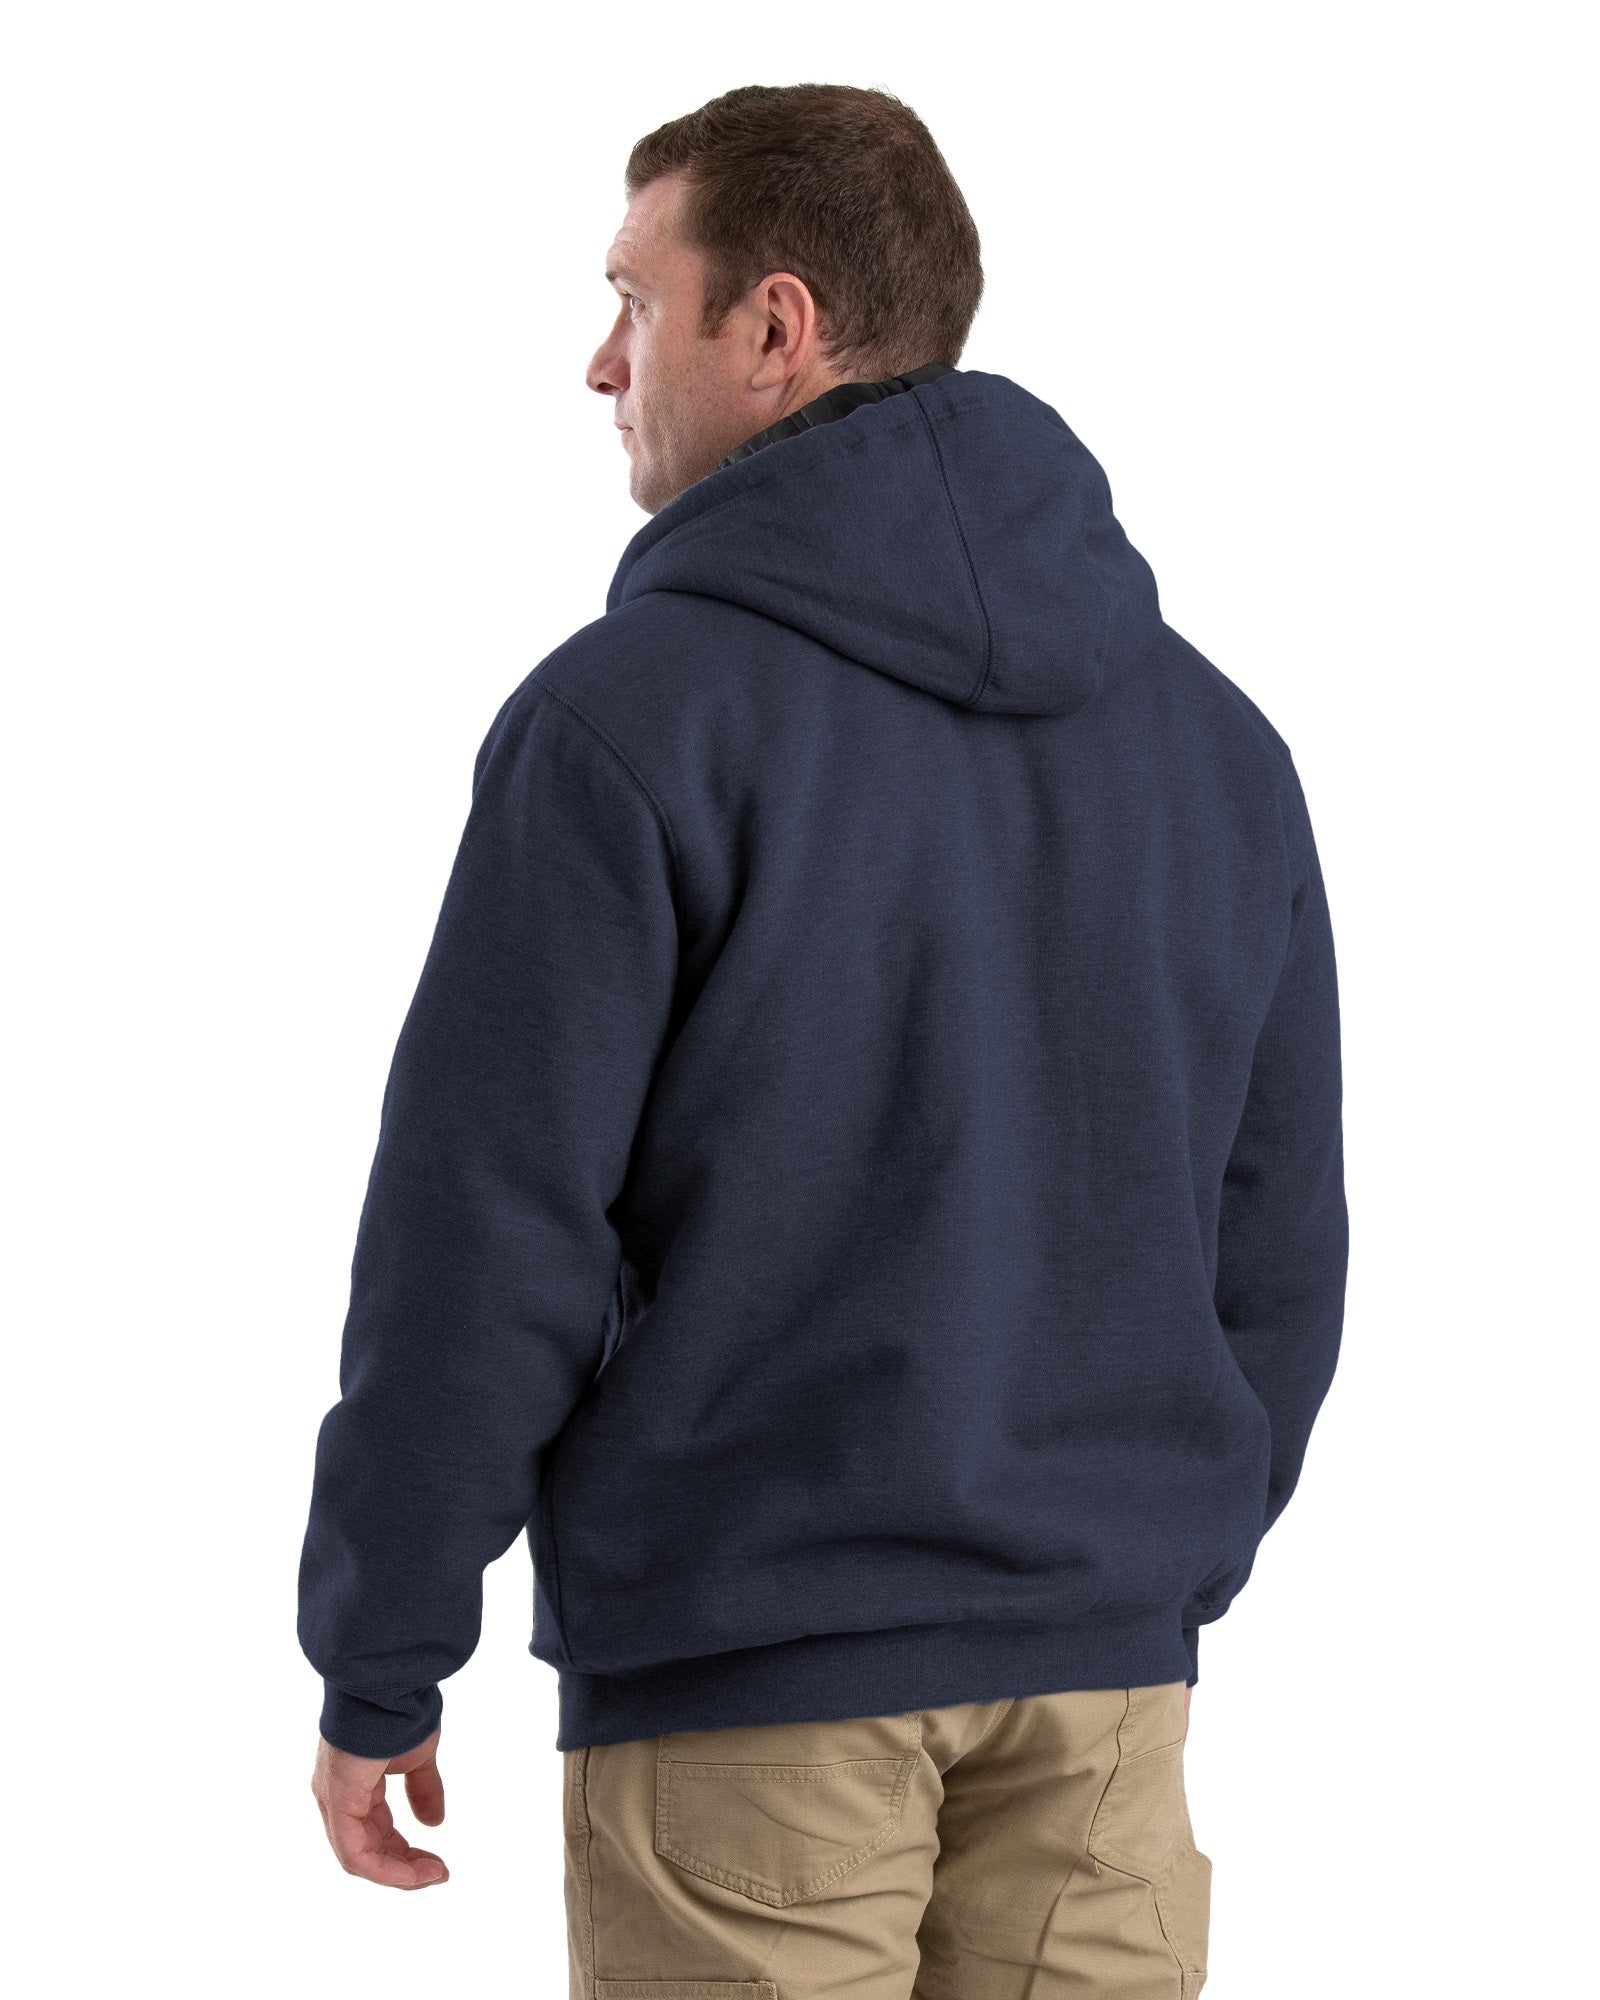 SZ612NV Highland Insulated Full-Zip Hooded Sweatshirt